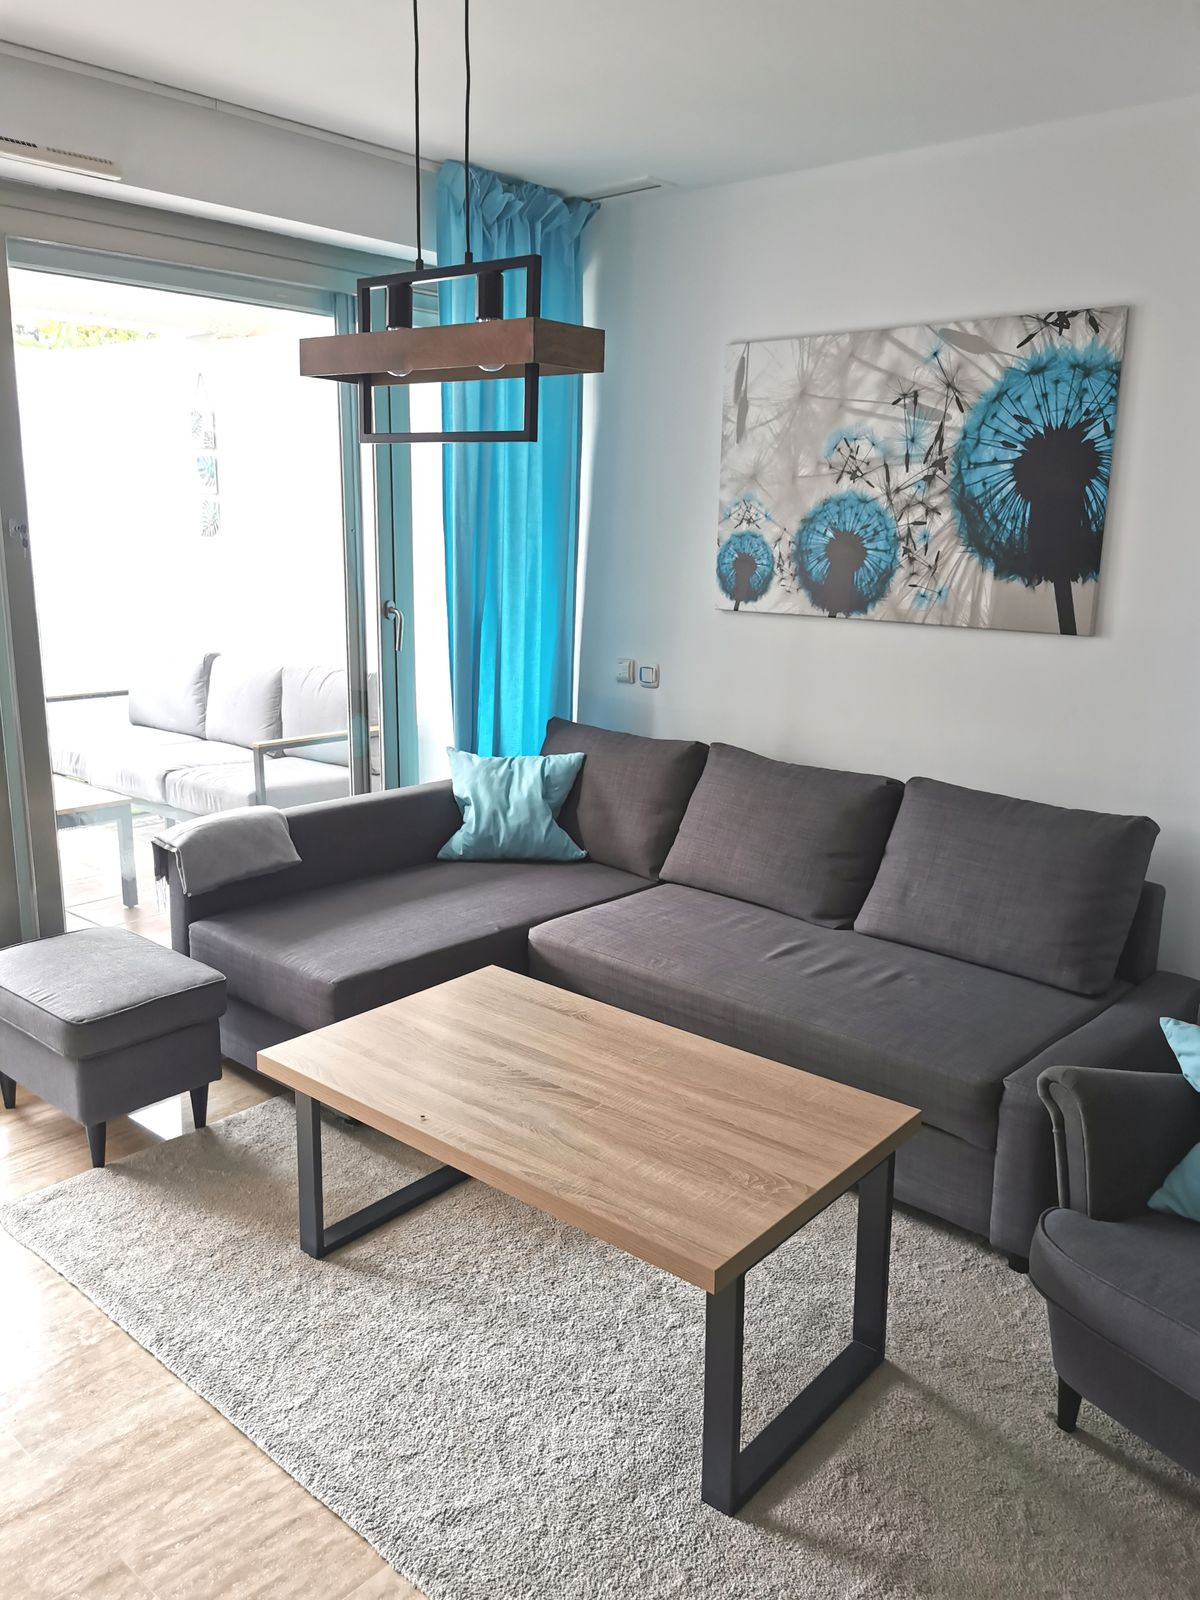 1 bedroom Apartment For Sale in Mijas, Málaga - thumb 23